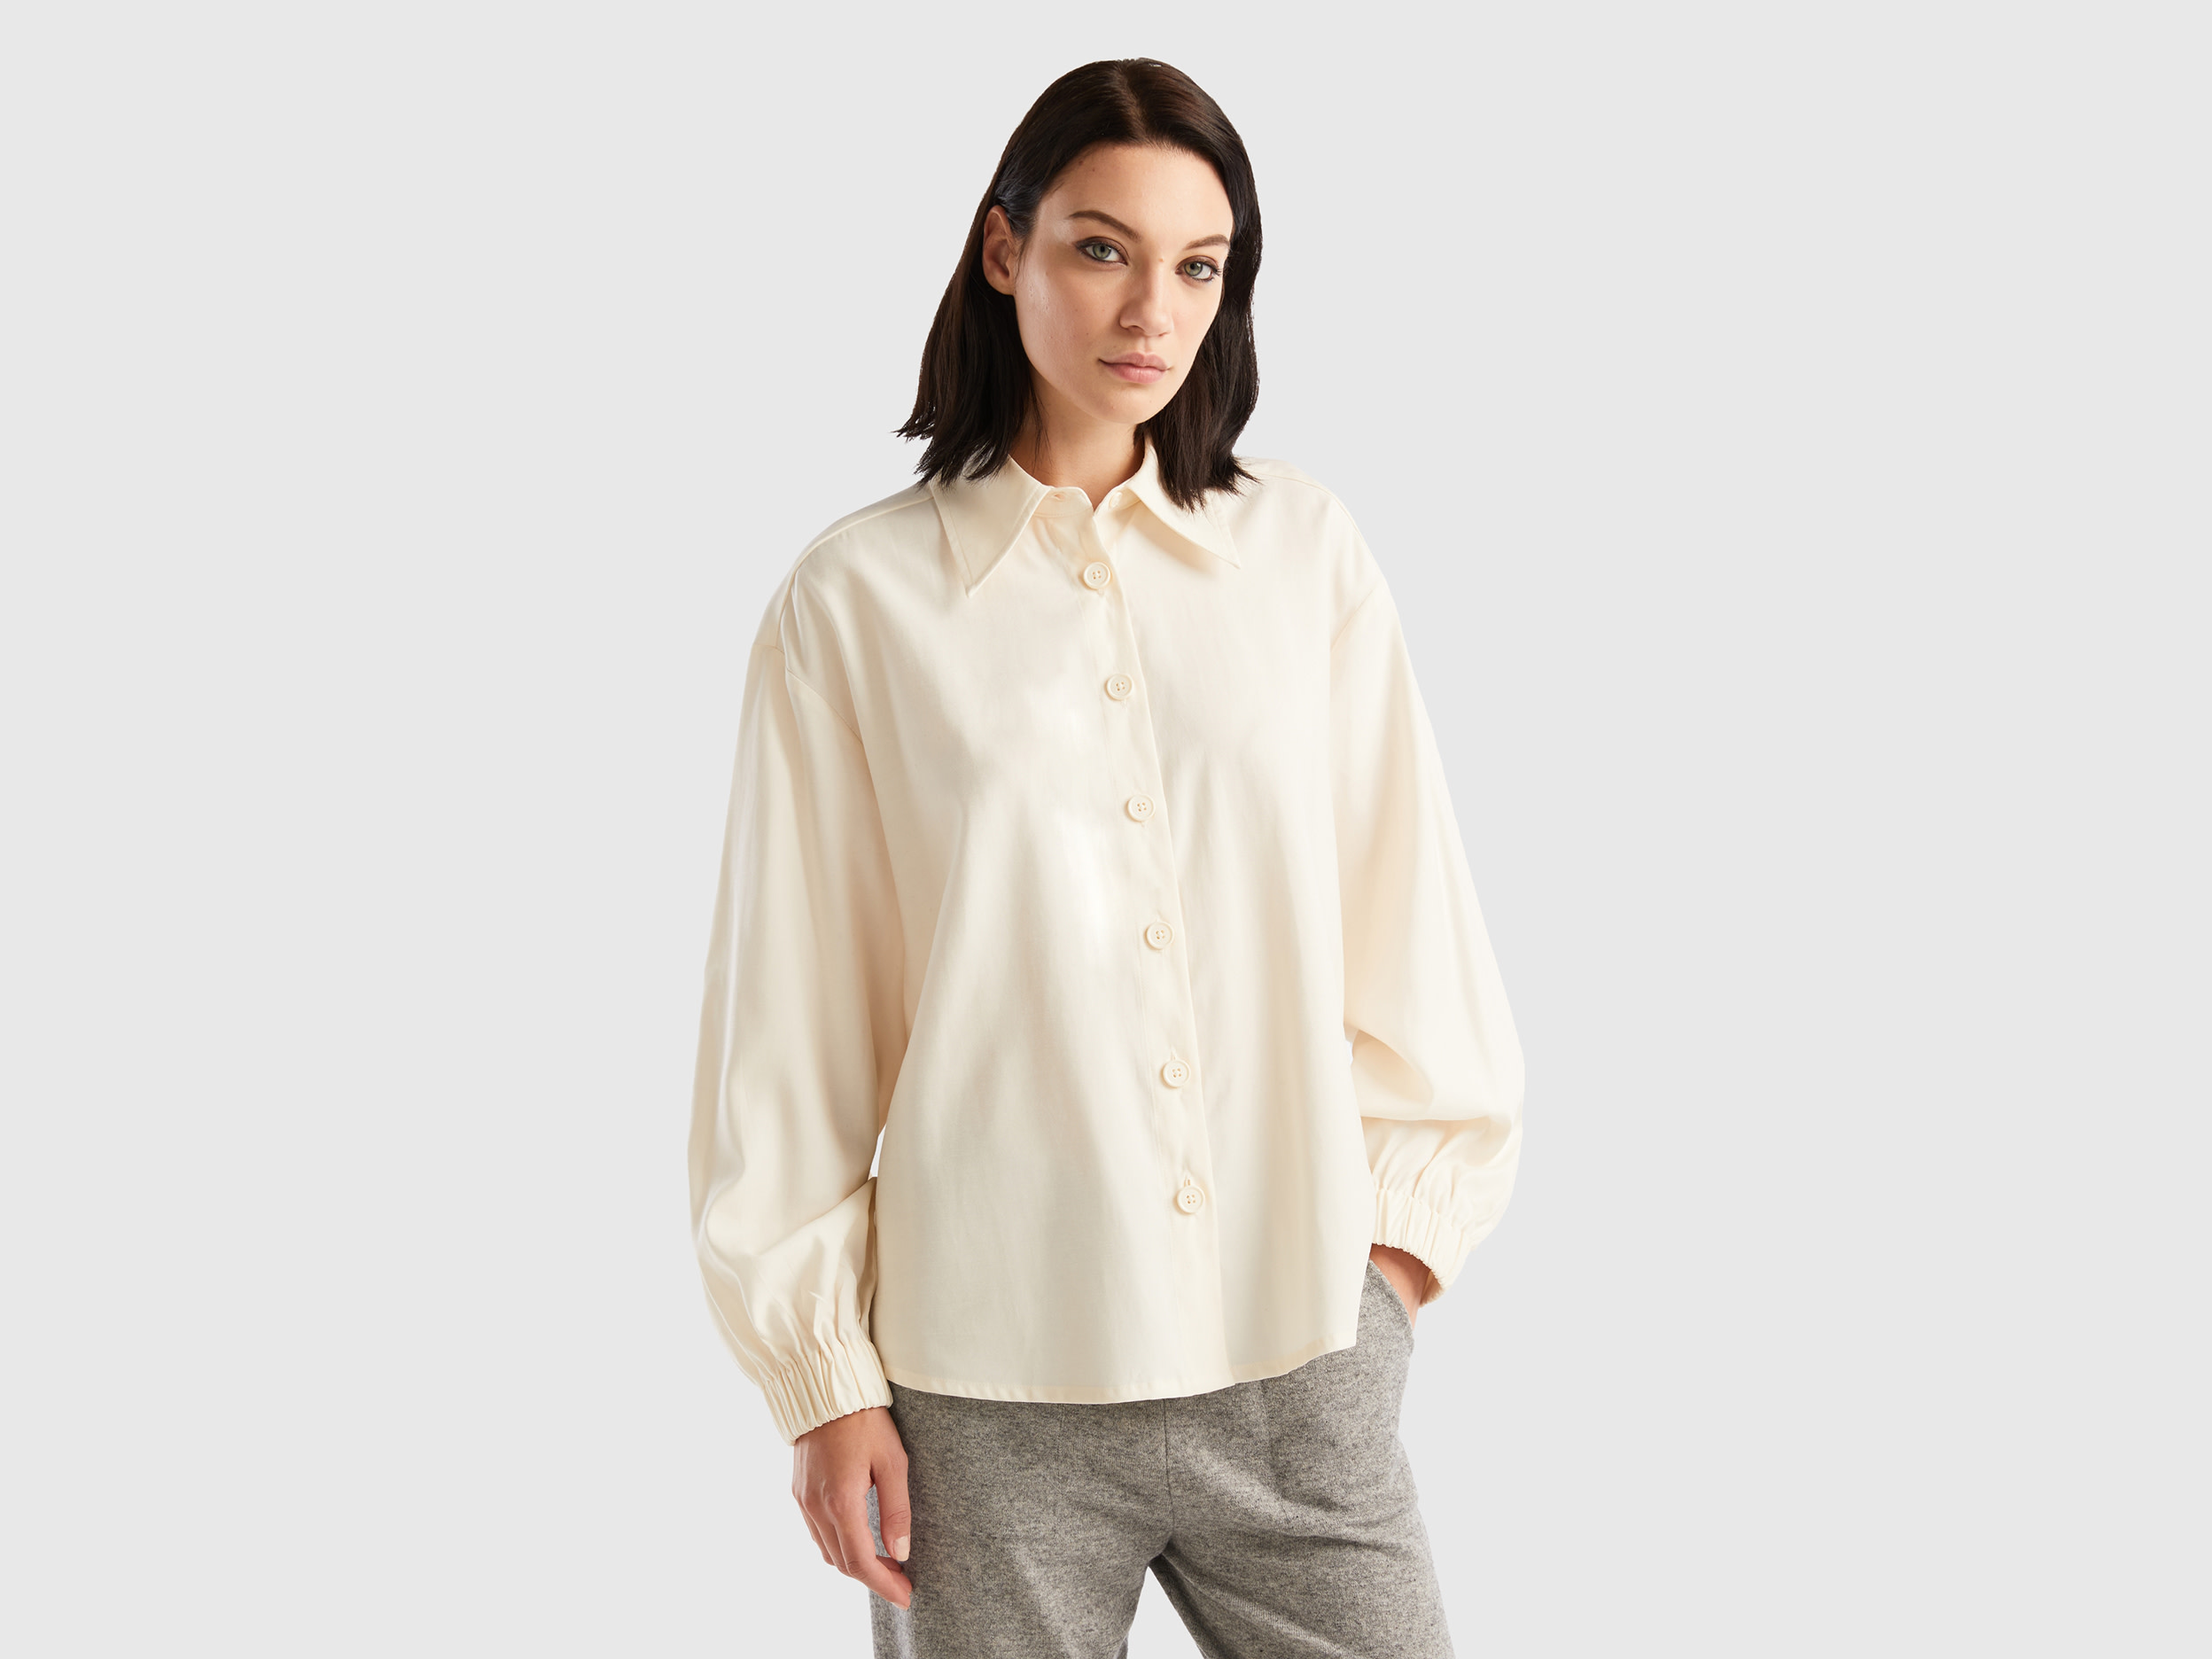 Benetton, Viscose And Linen Shirt, size S, Creamy White, Women